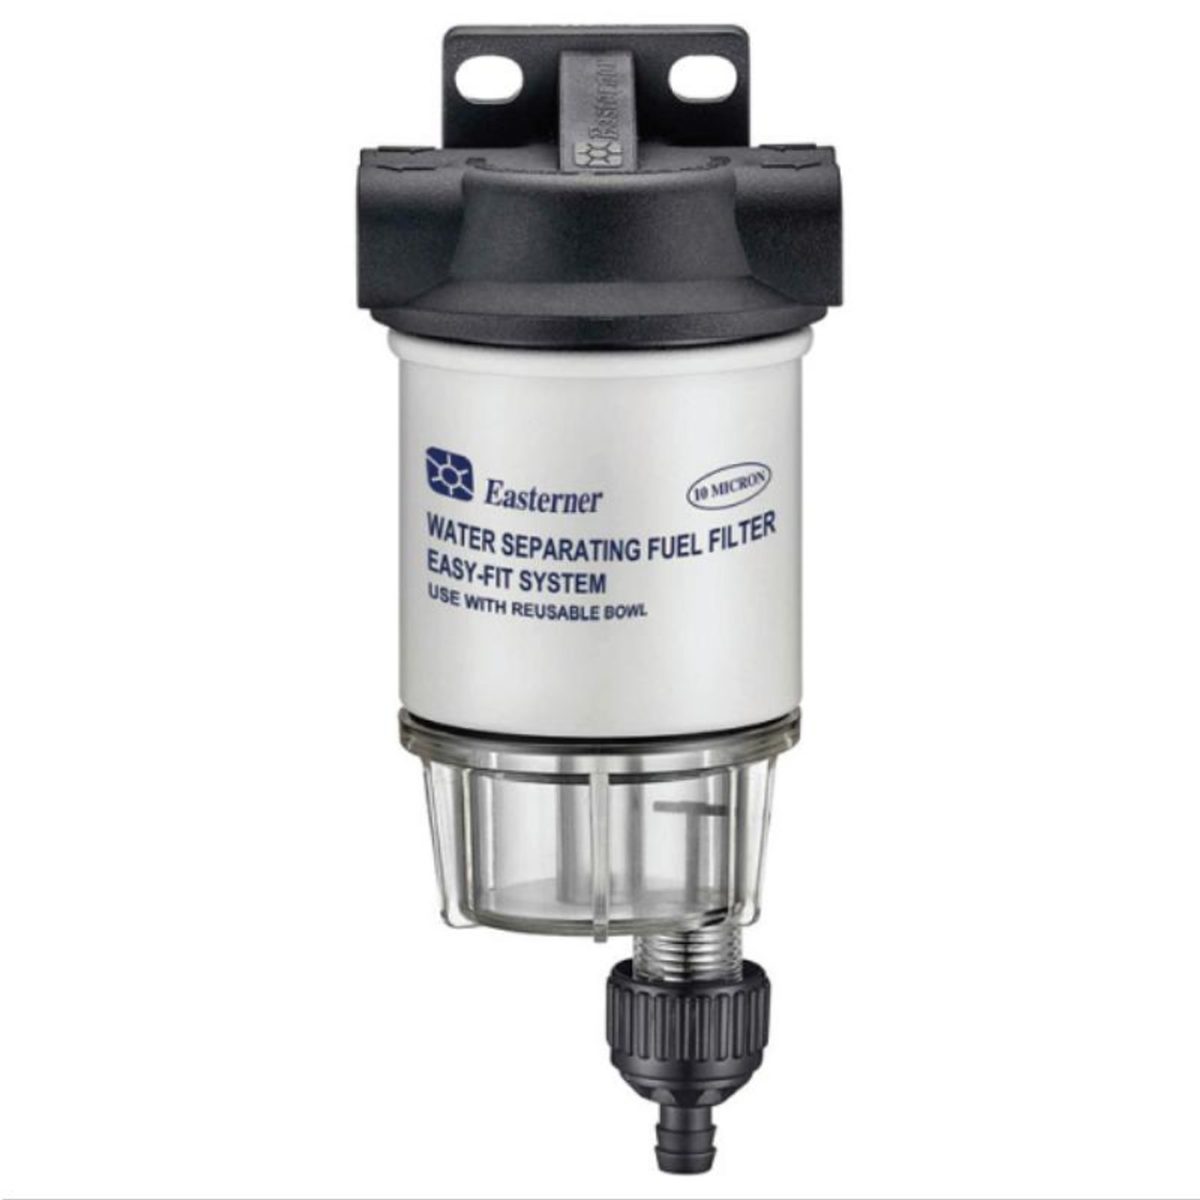 easterner-water-separating-fuel-filter-kit-compact-easyfit-RWB5365